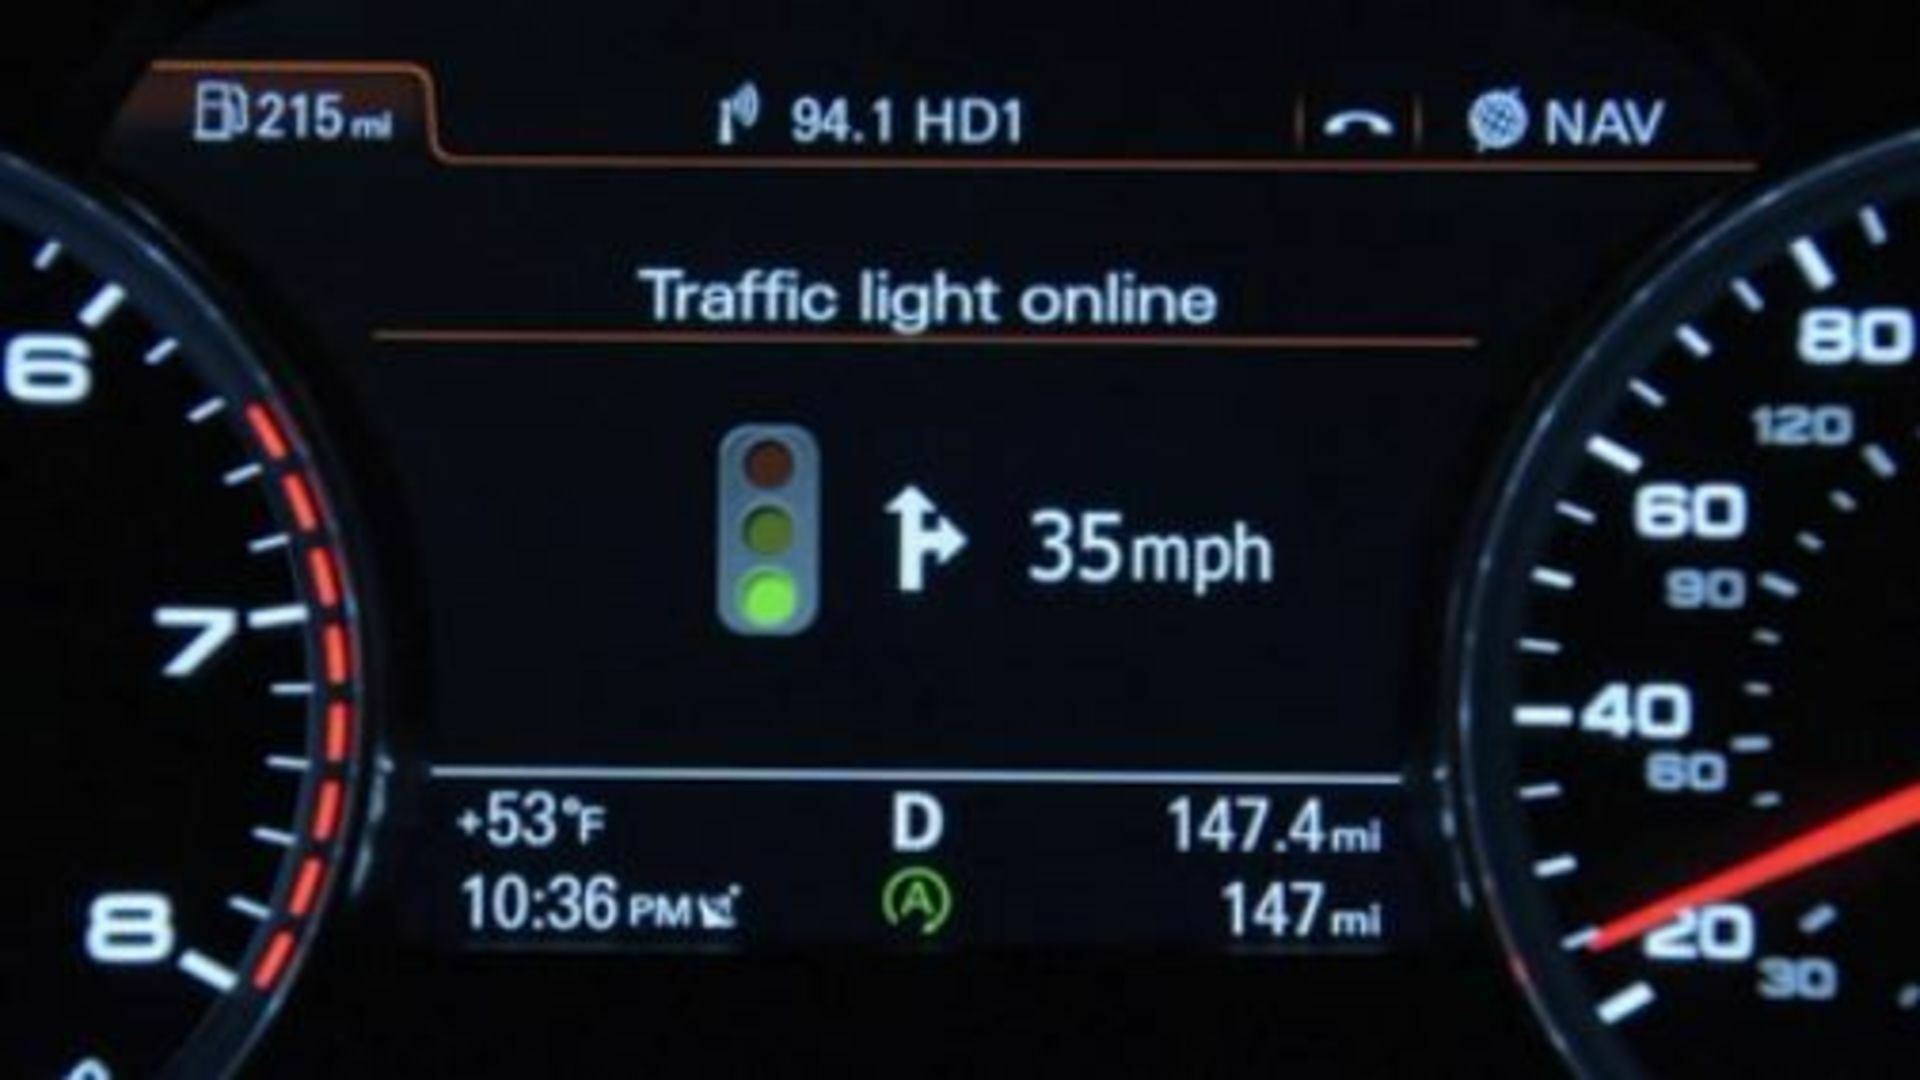 Audi connect - Online traffic light information